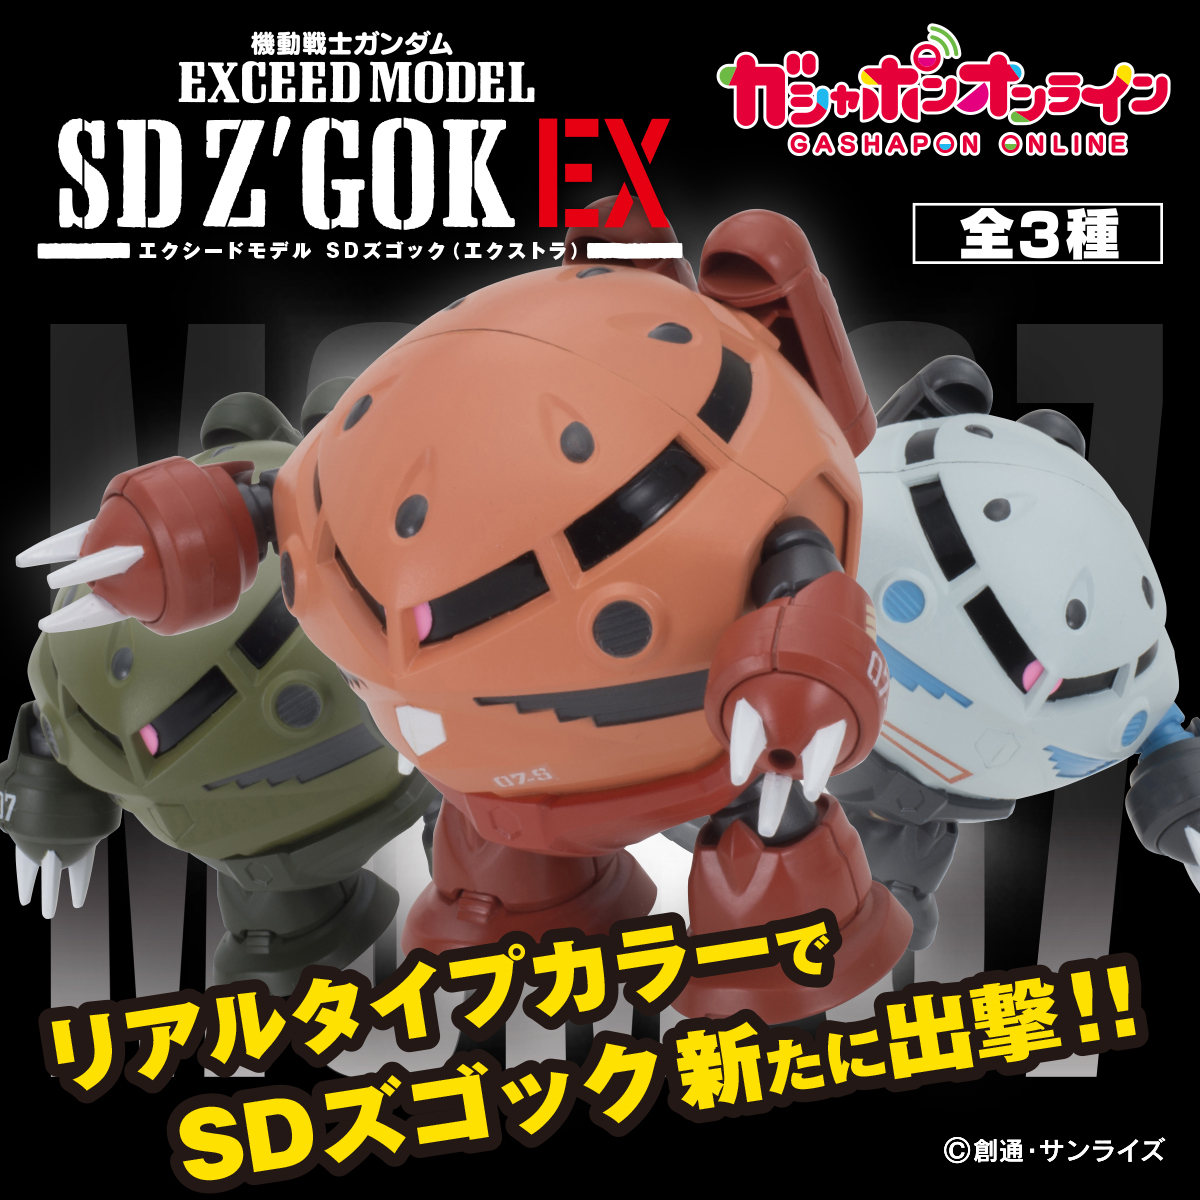 Mobile Suit Gundam Exceed Model SD Z'Gok EX